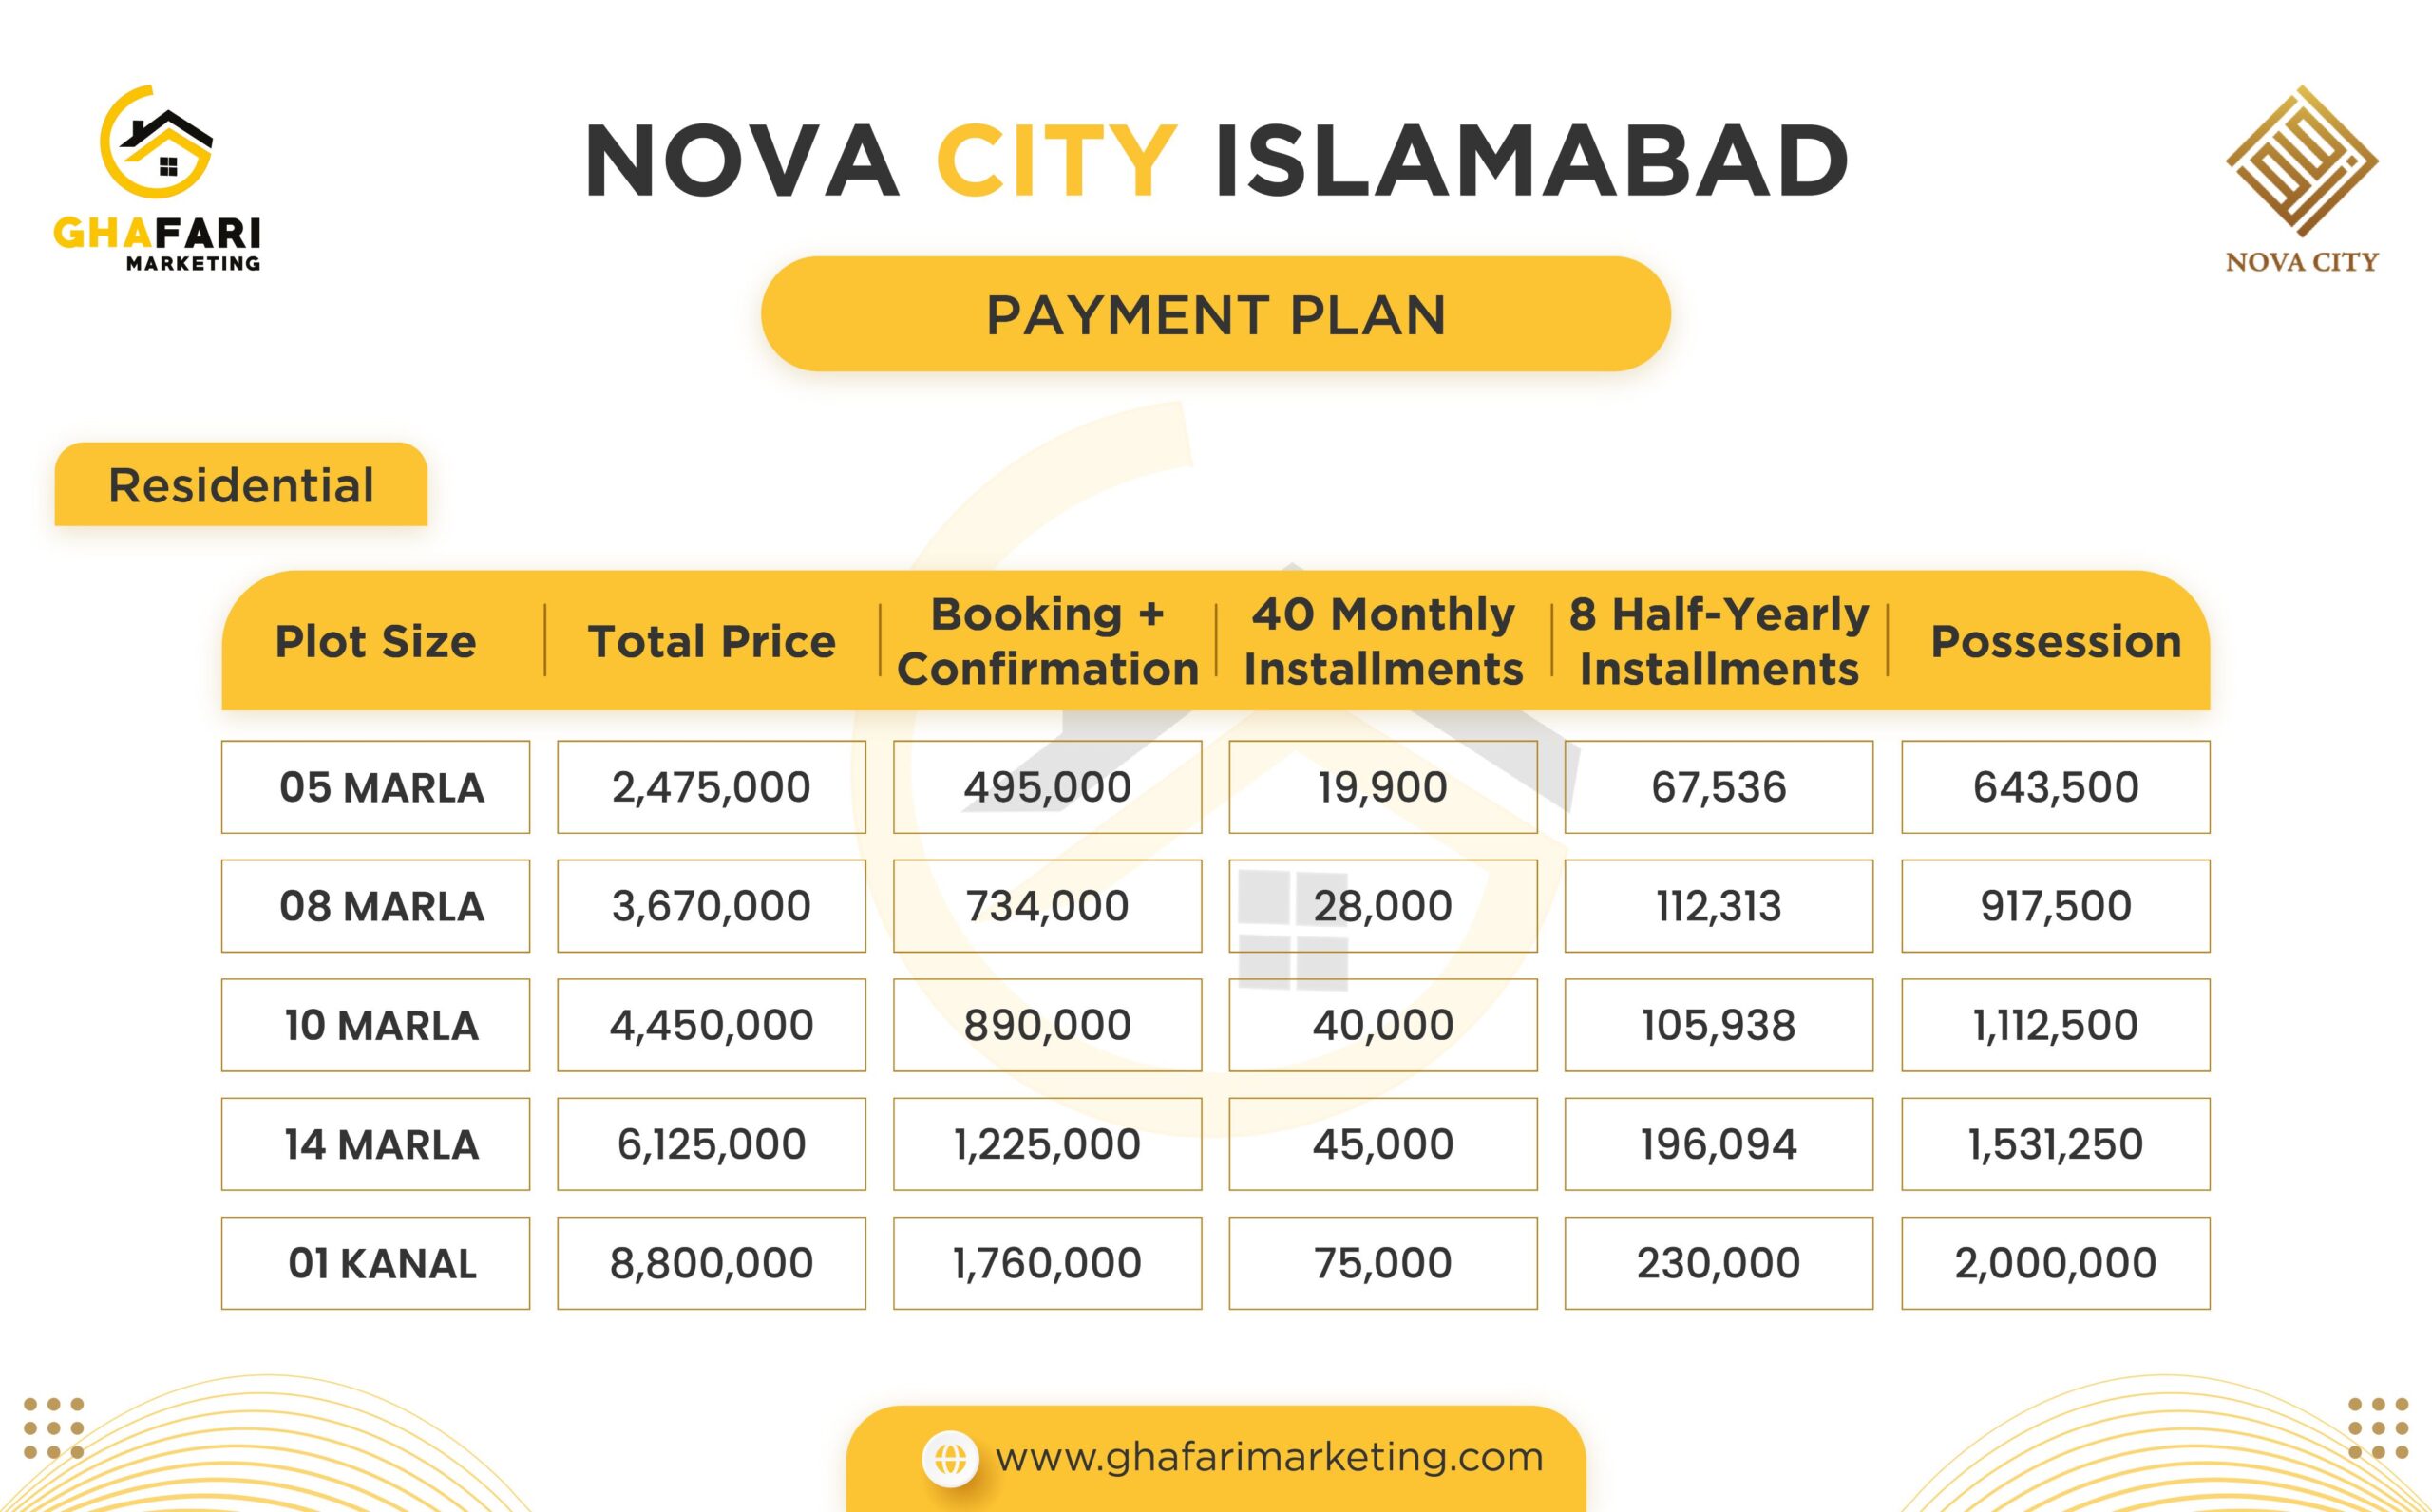 Nova City Islamabad Payment Plan